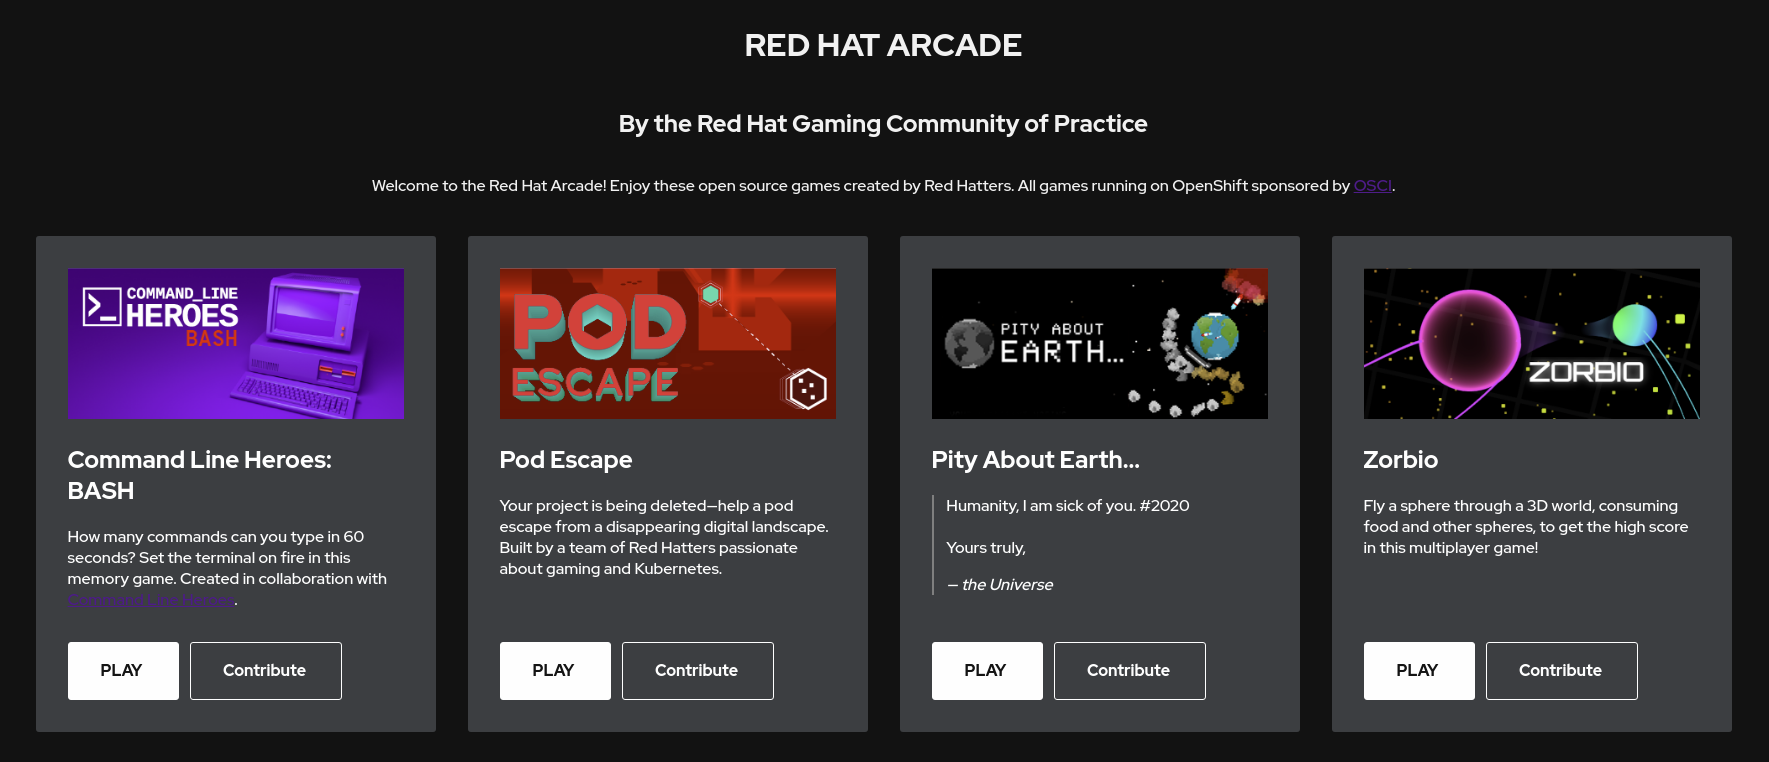 The Top Hat Club - iOS Platform Game - Showcase - OpenFL Community